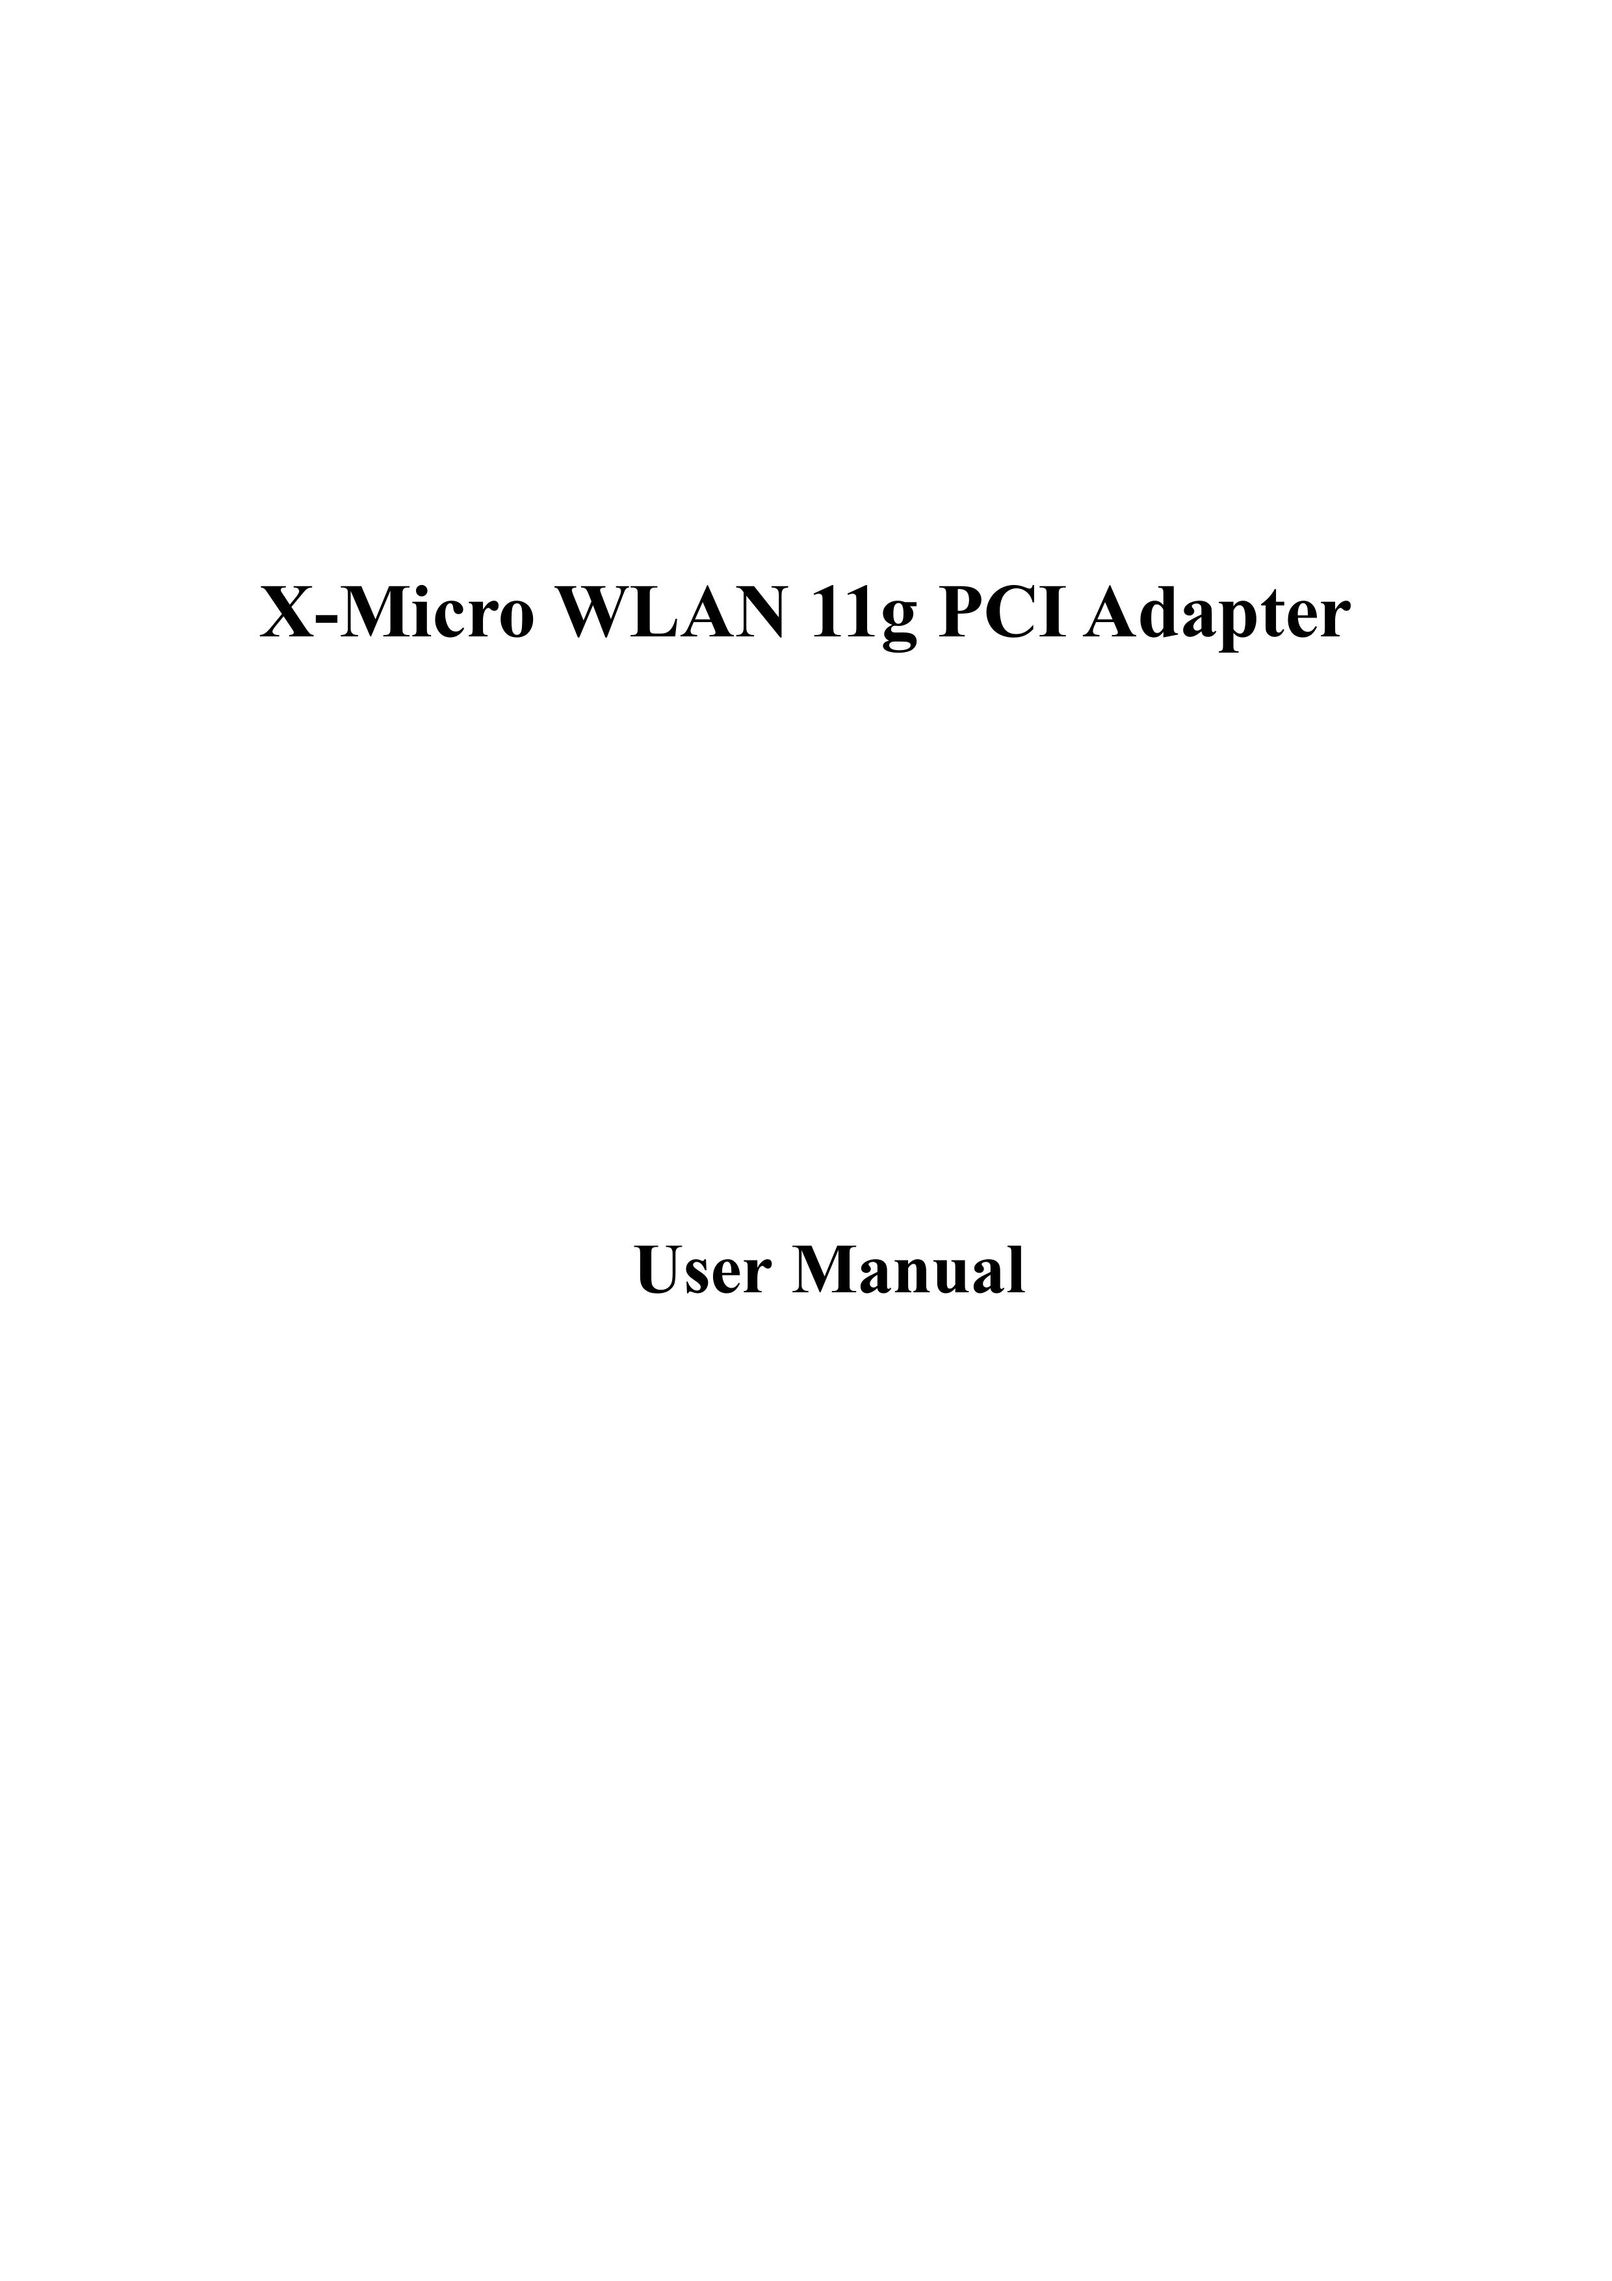 X-Micro Tech. PCI Adapter fxmicro Network Card User Manual